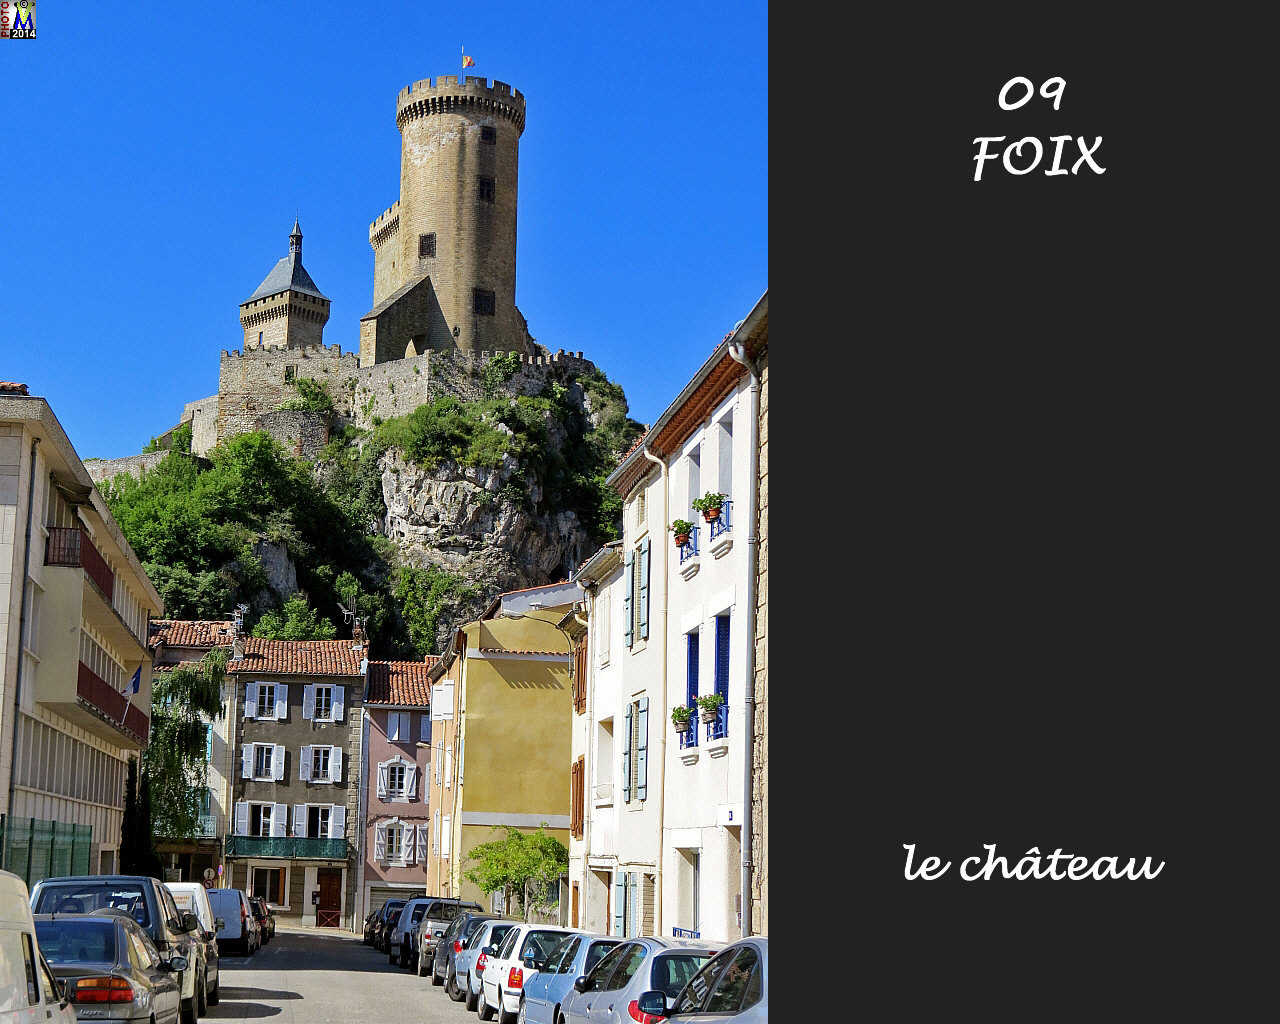 09FOIX_chateau_112.jpg